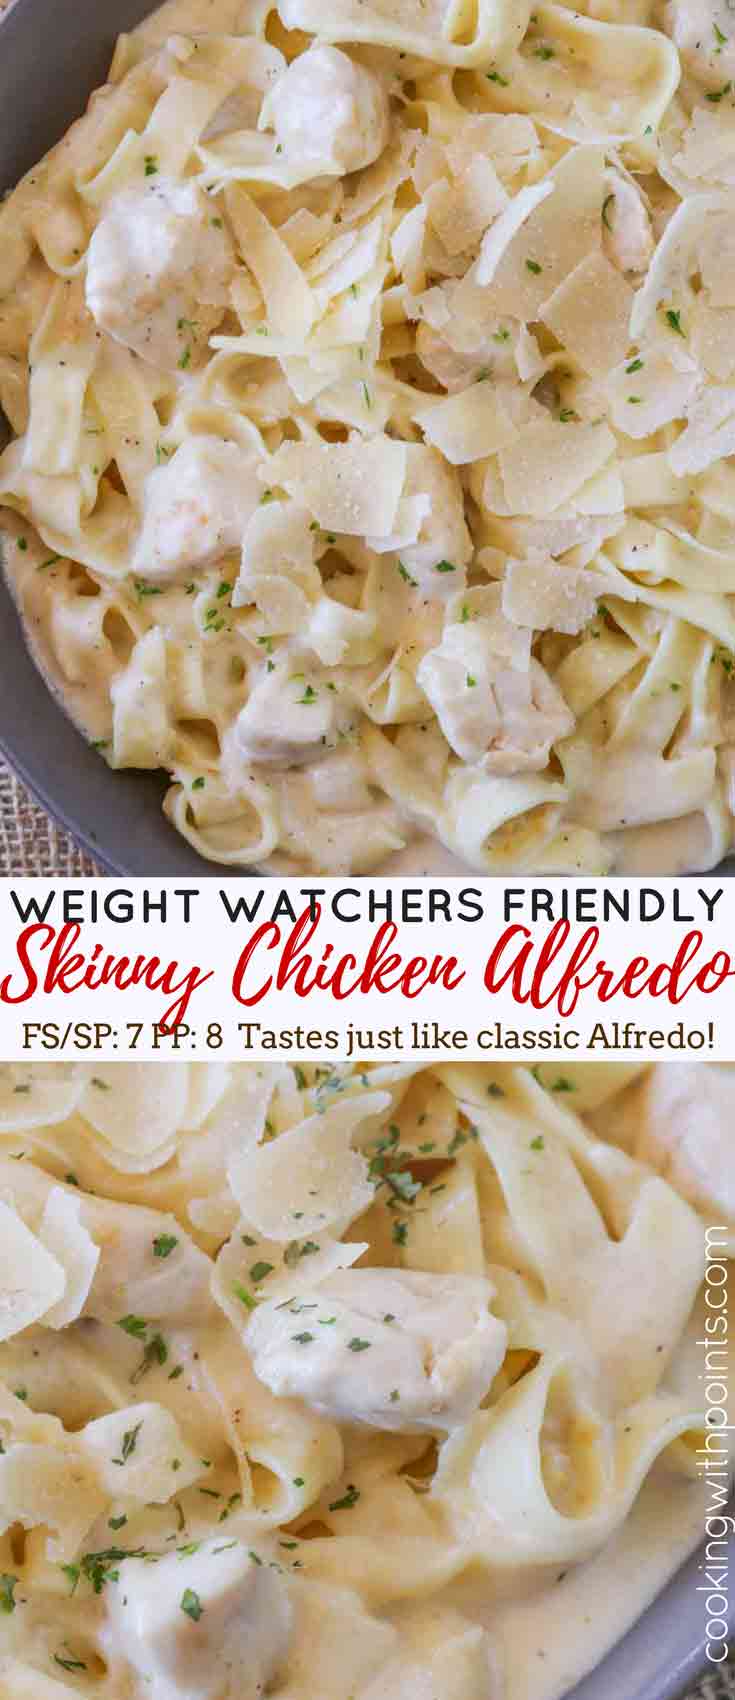 Skinny Chicken Alfredo